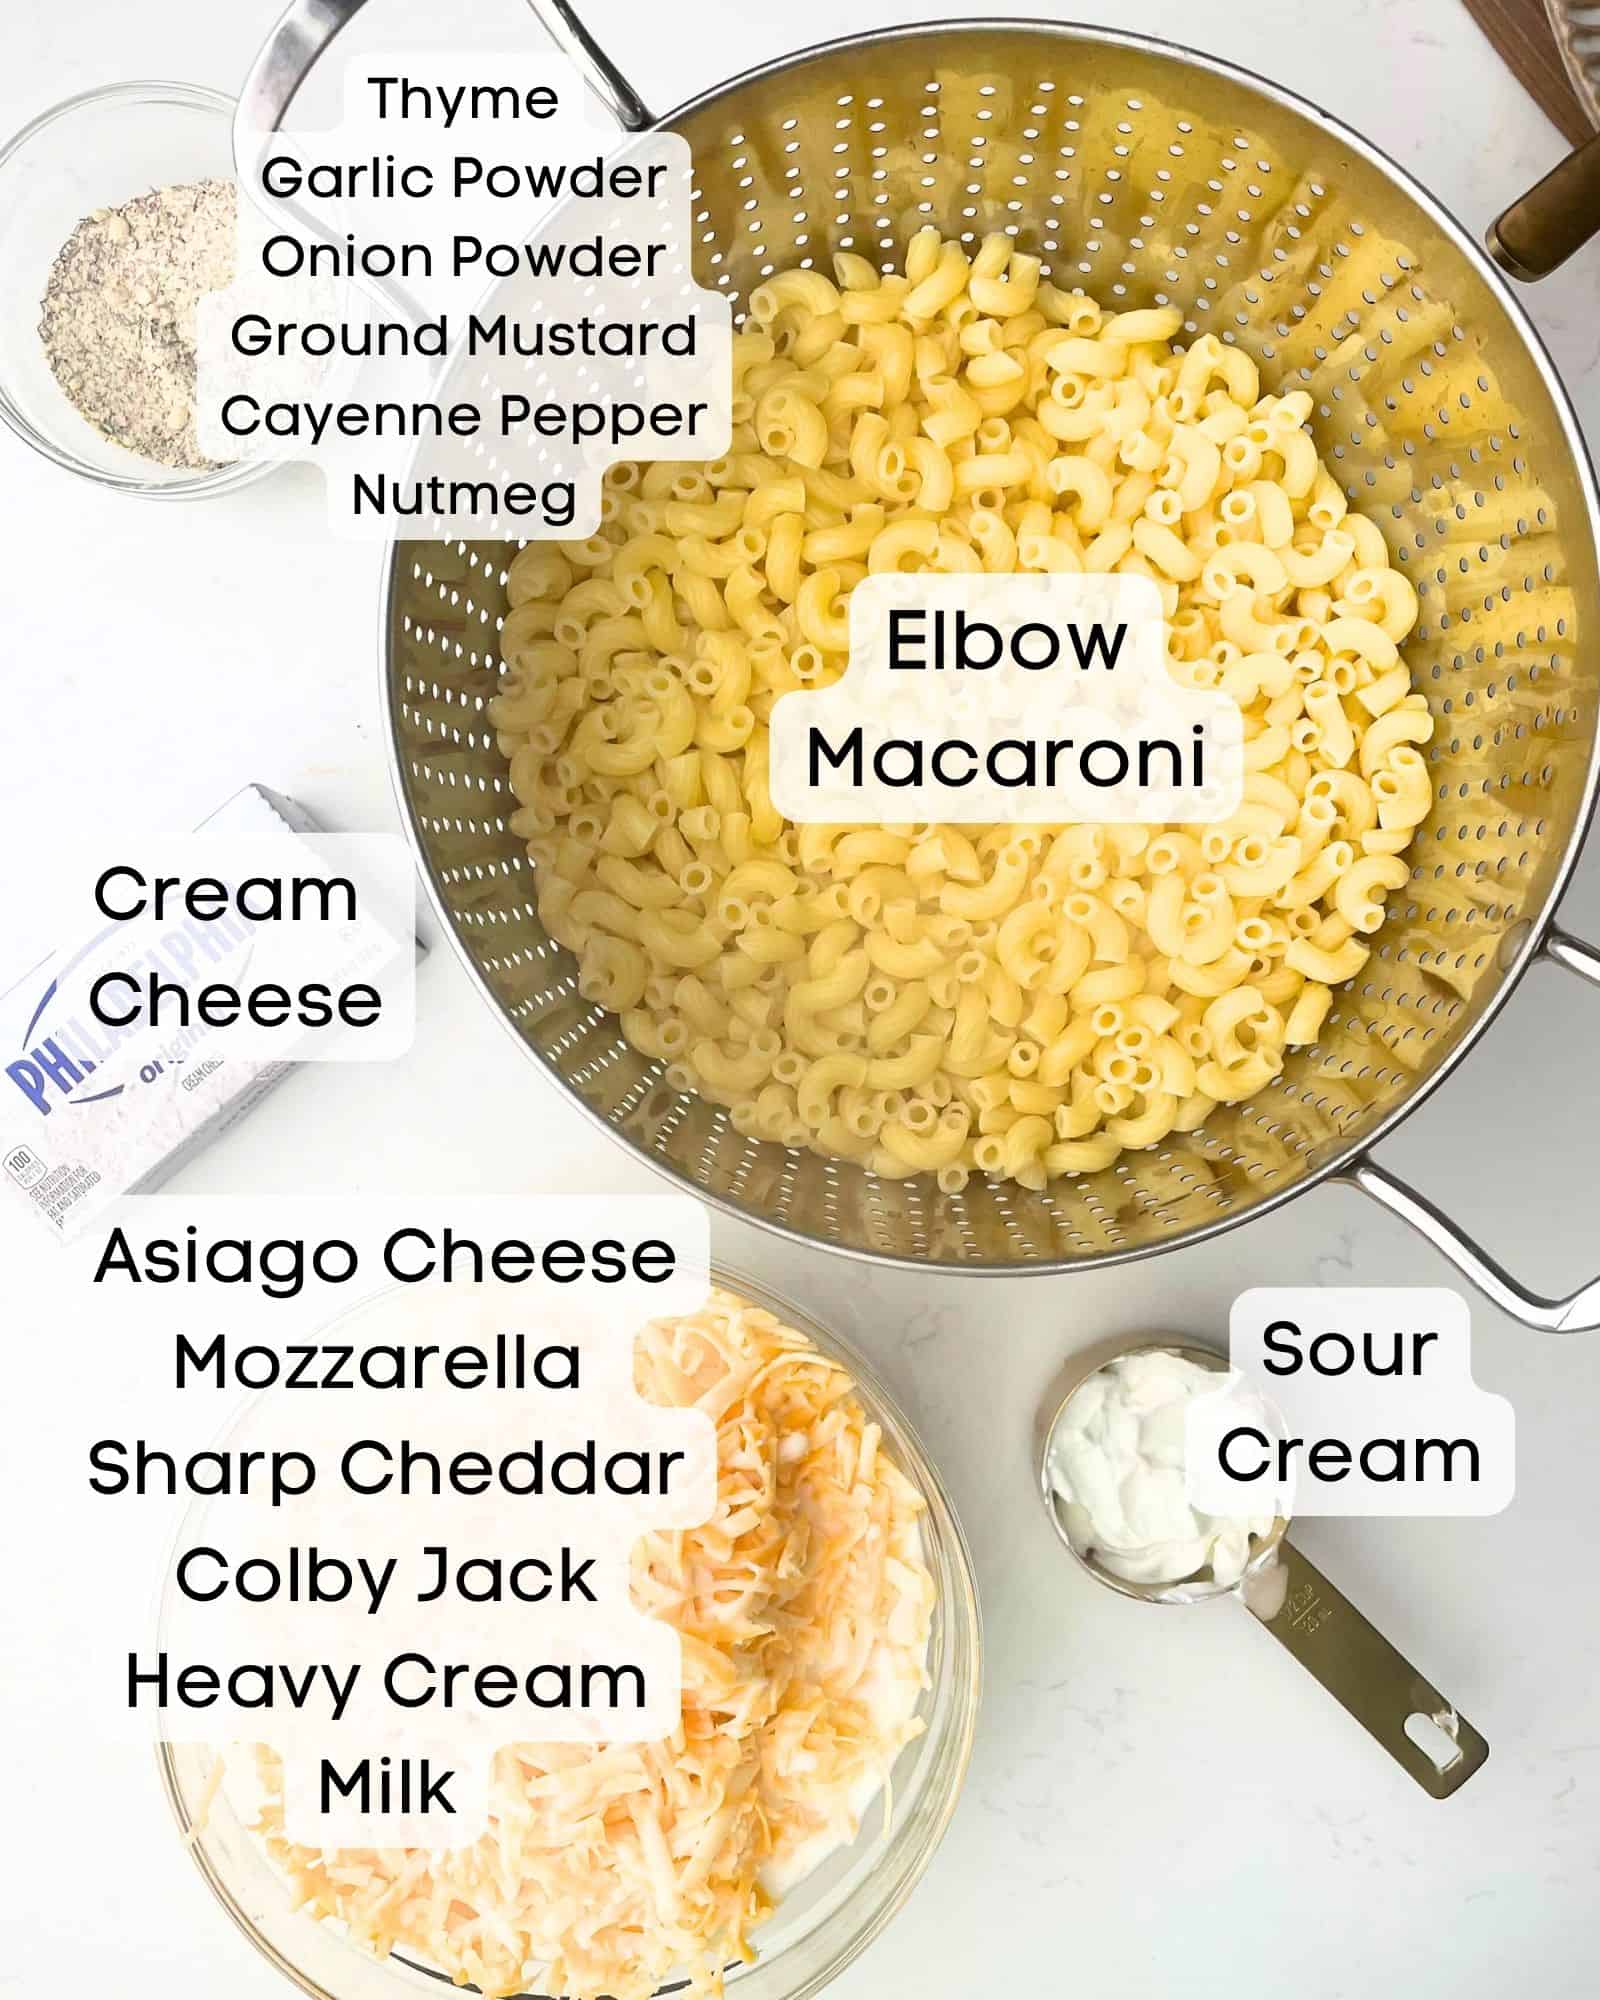 ingredients to make mac and cheese - elbow macaroni, seasonings, sour cream, heavy cream, whole milk, cream cheese, cheddar cheese, asiago cheese, colby jack cheese, and mozzarella cheese.